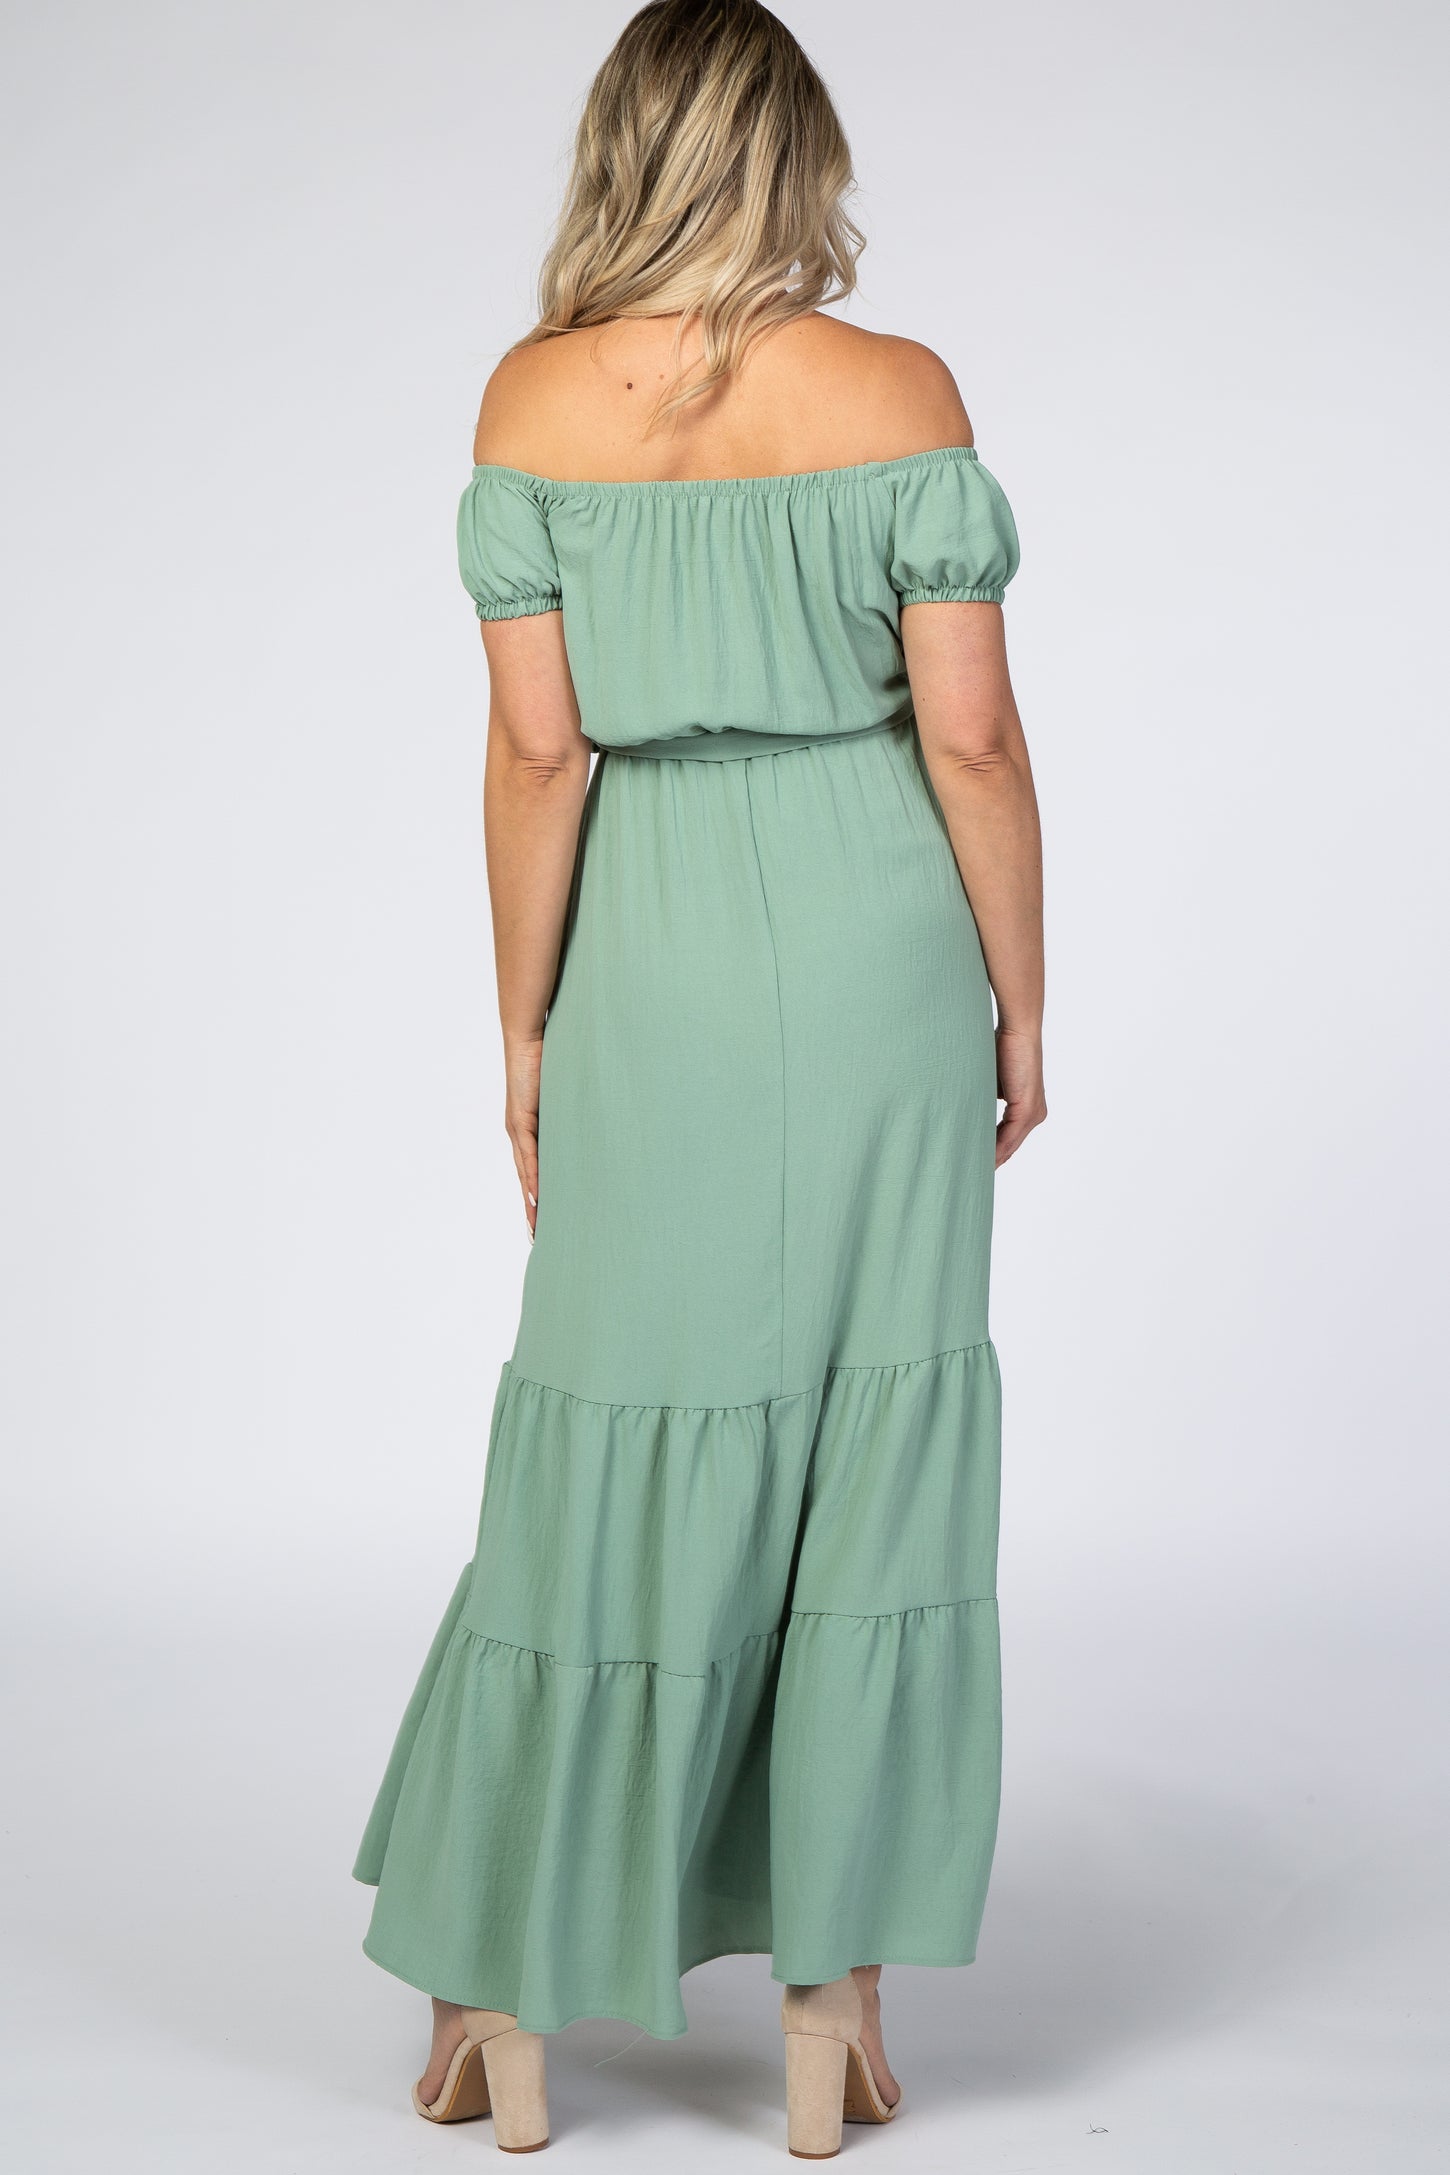 Mint Green Off Shoulder Ruffle Hem Maternity Maxi Dress